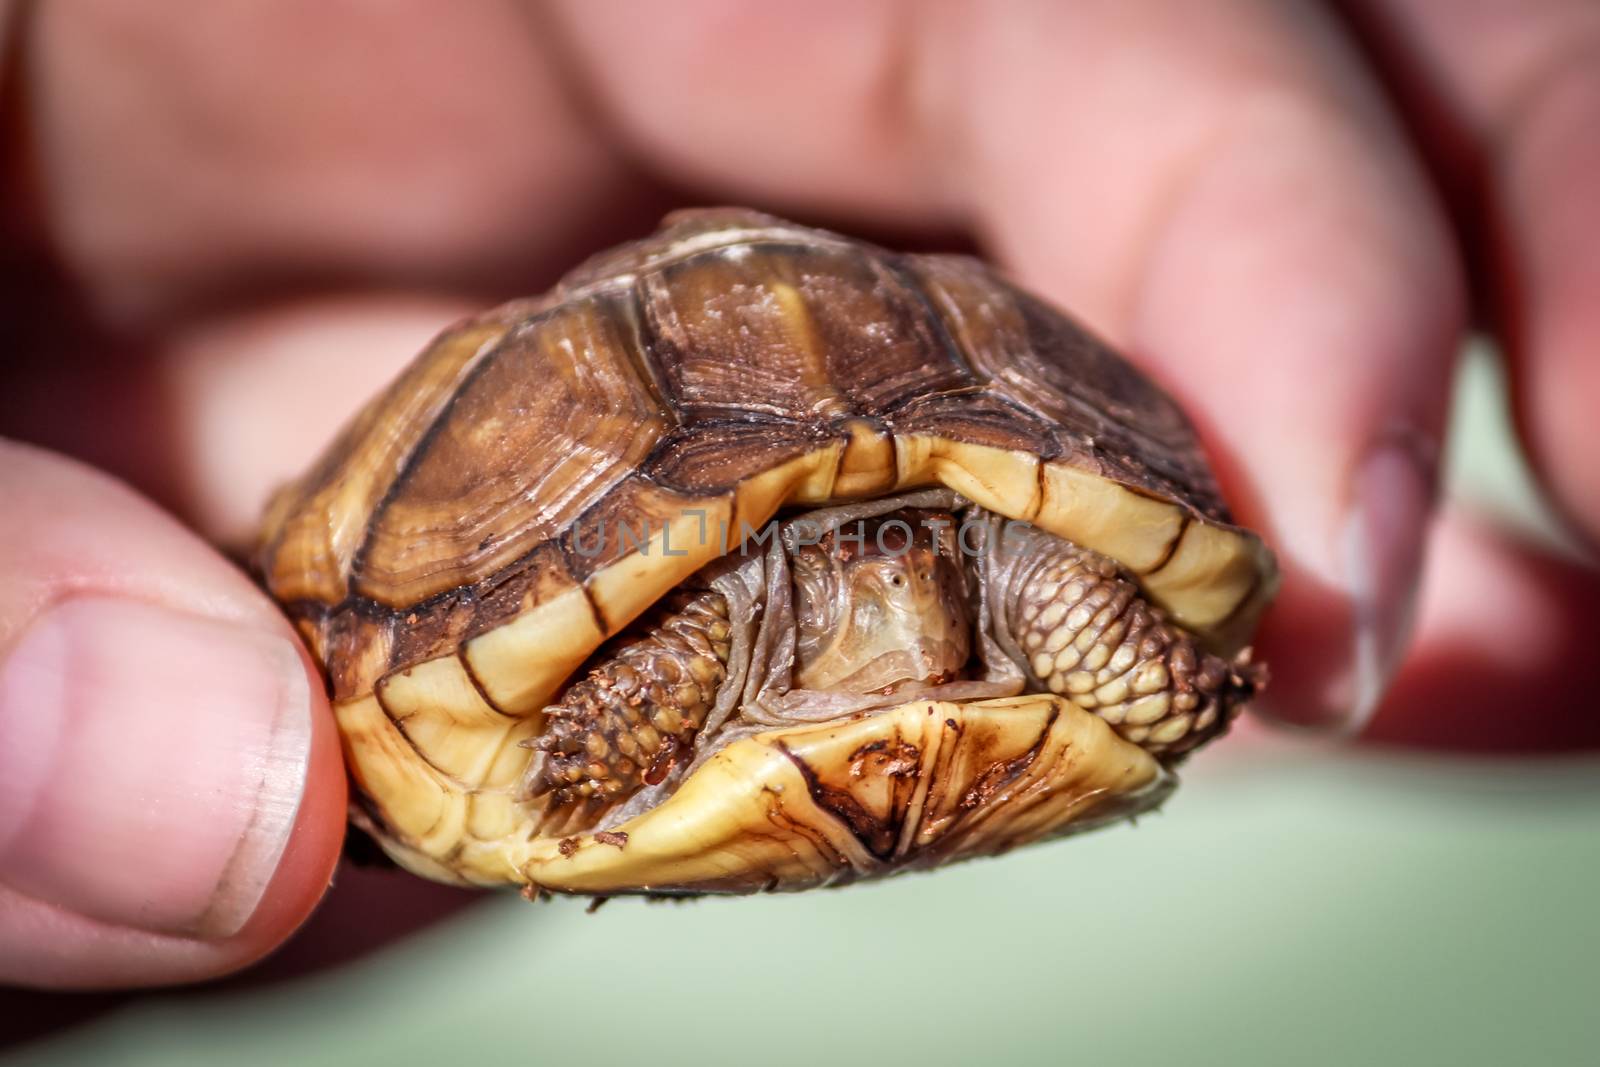 Closeup of a juvenile turtle. Color image.